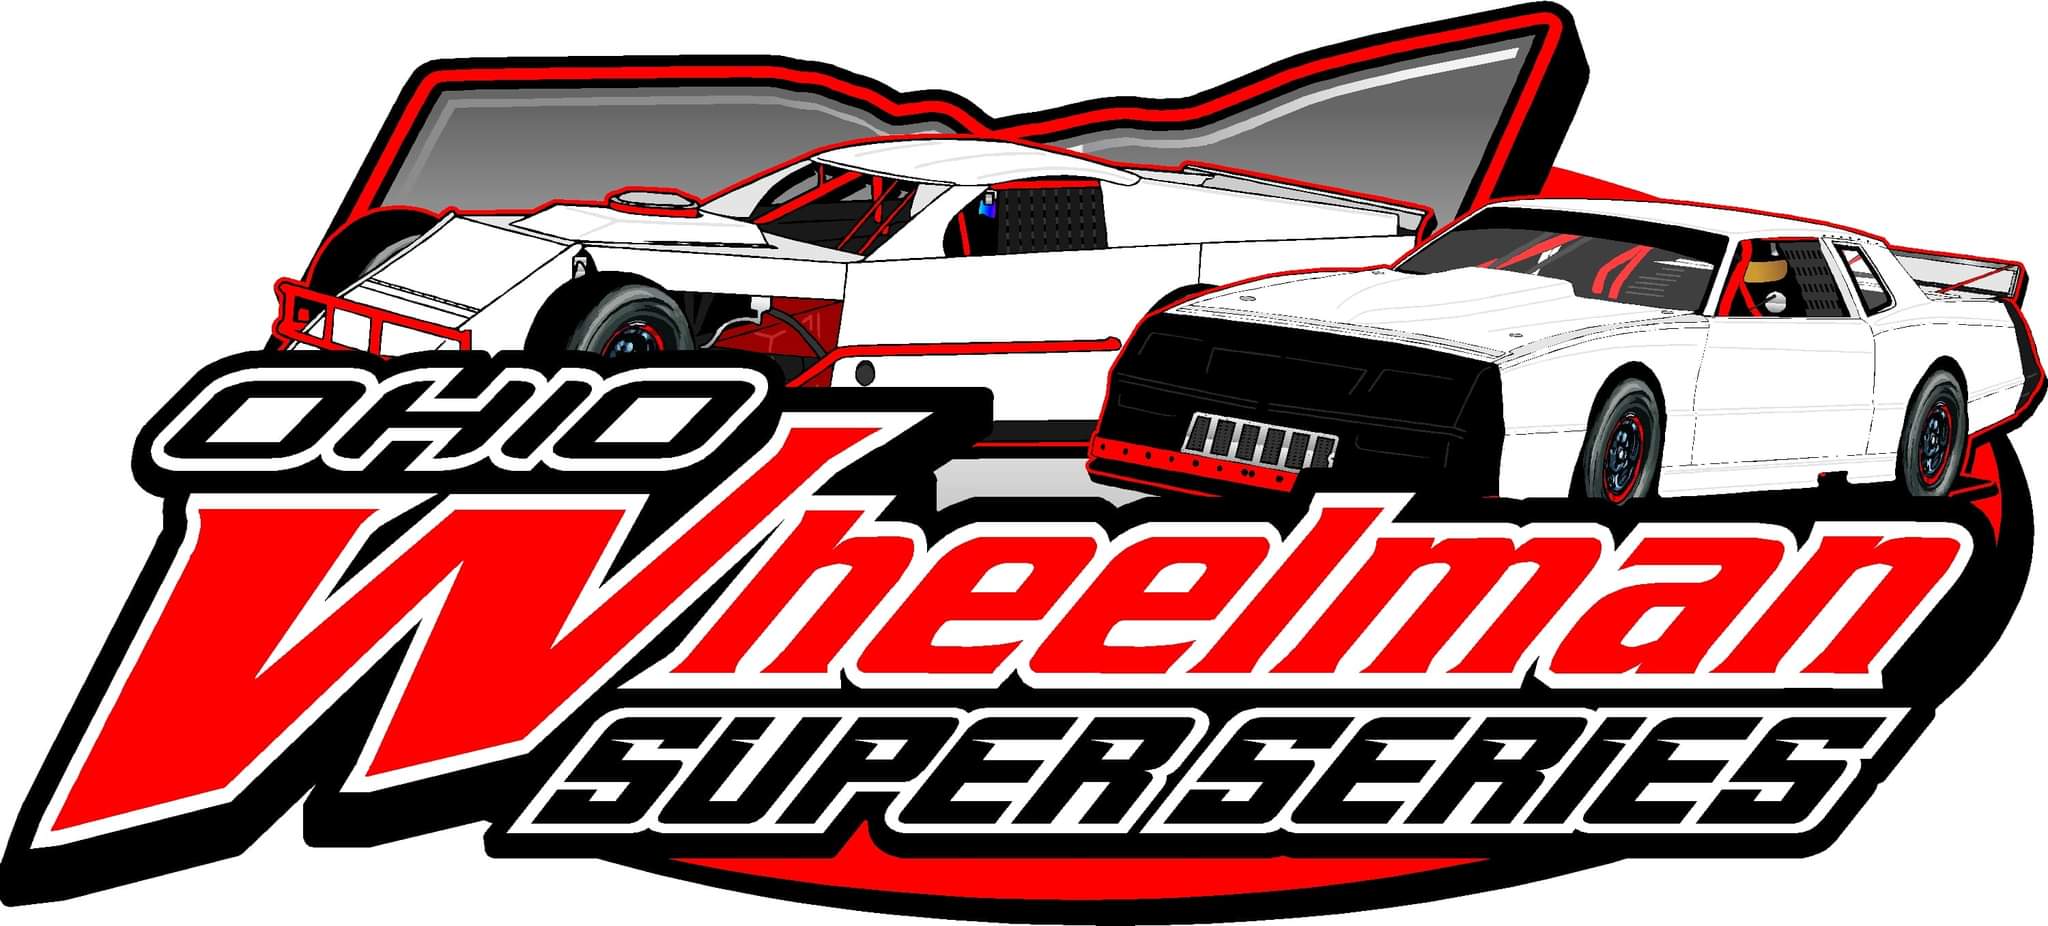 Ohio Wheelman Series